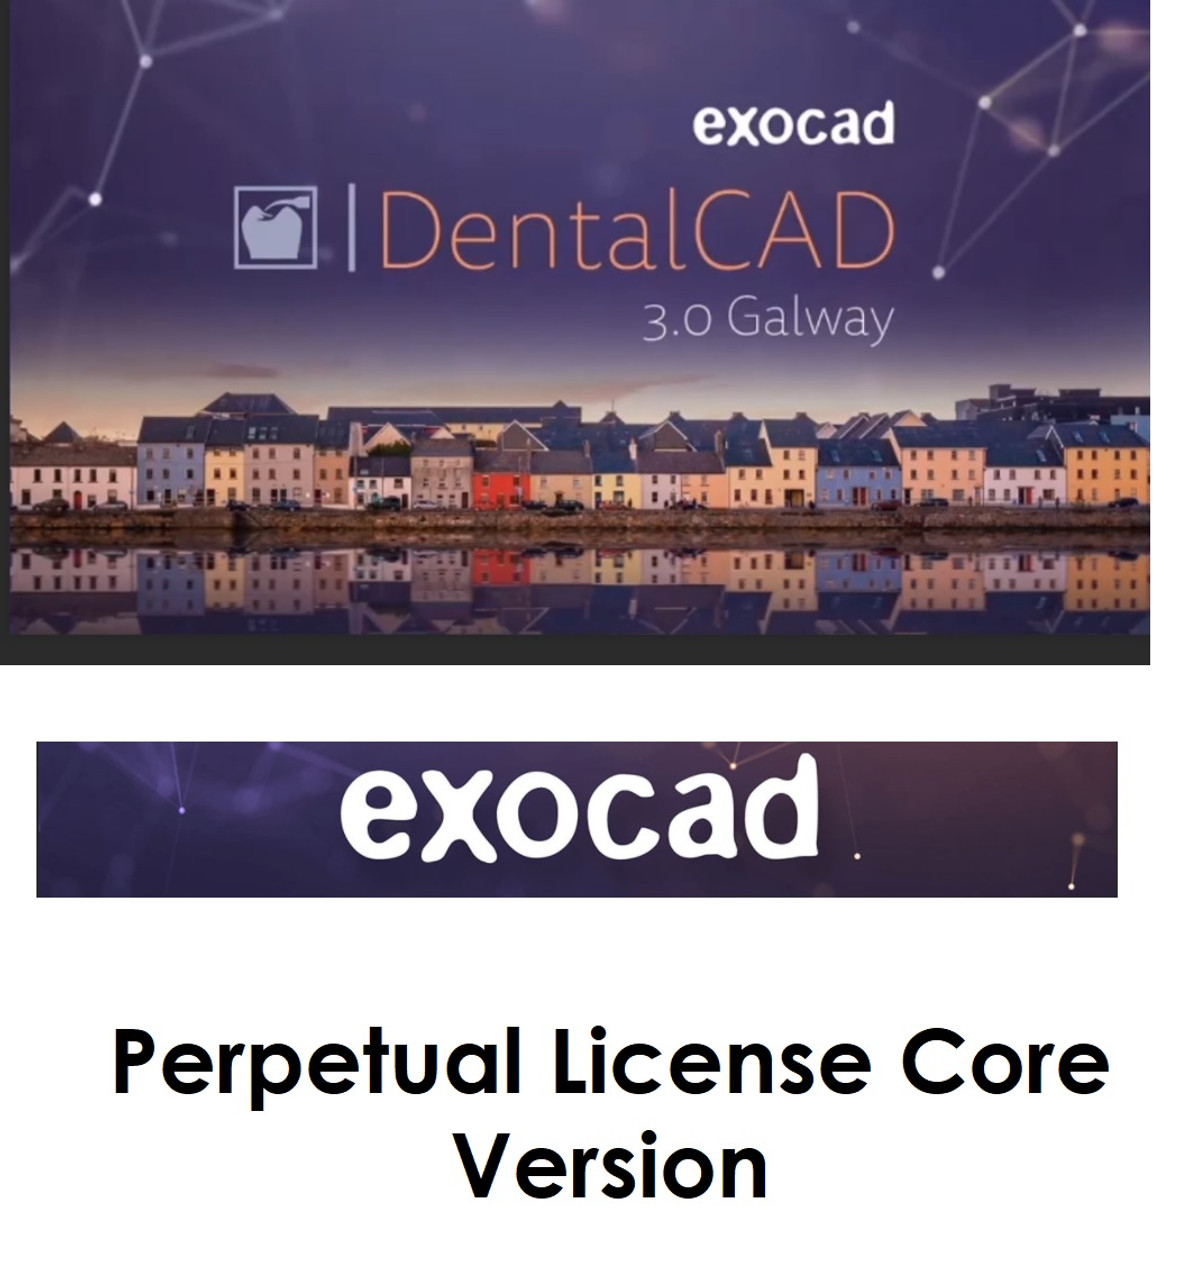 Perpetual License Core Version